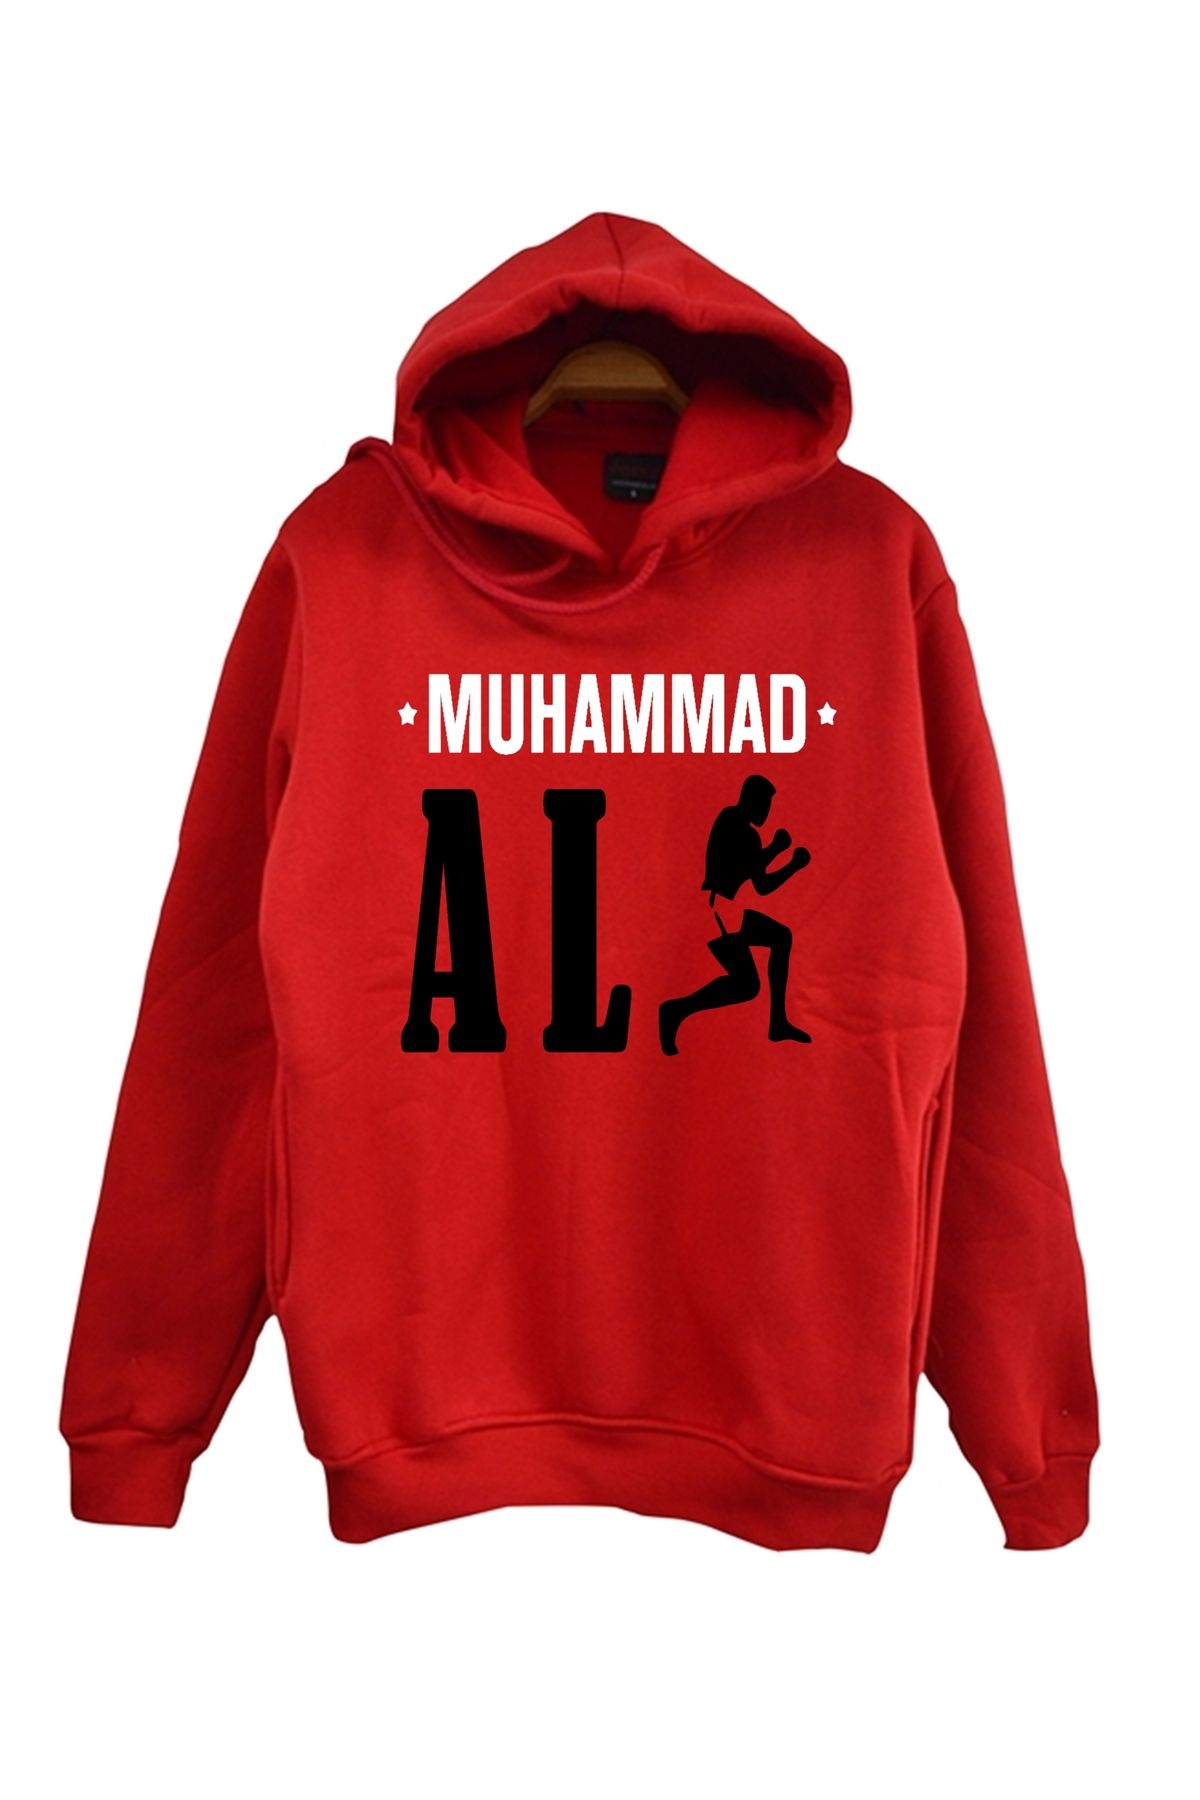 The Fame Muhammed Ali, Boks, Boxing, Boksör Kırmızı Kapüşonlu Sweatshirt Hoodie